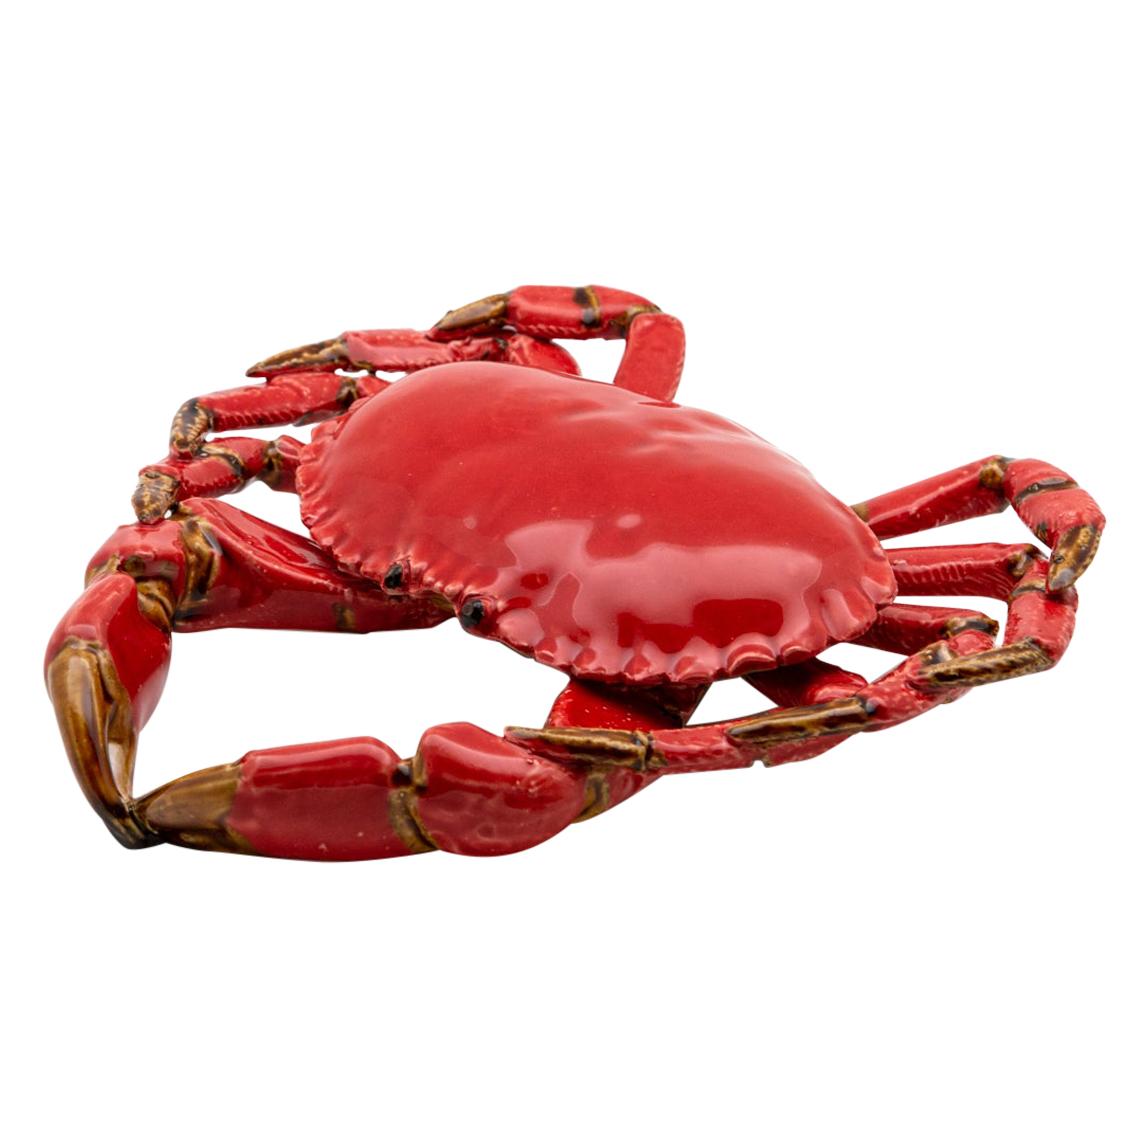 Portuguese Handmade Pallissy or Majollica Red Ceramic Crab